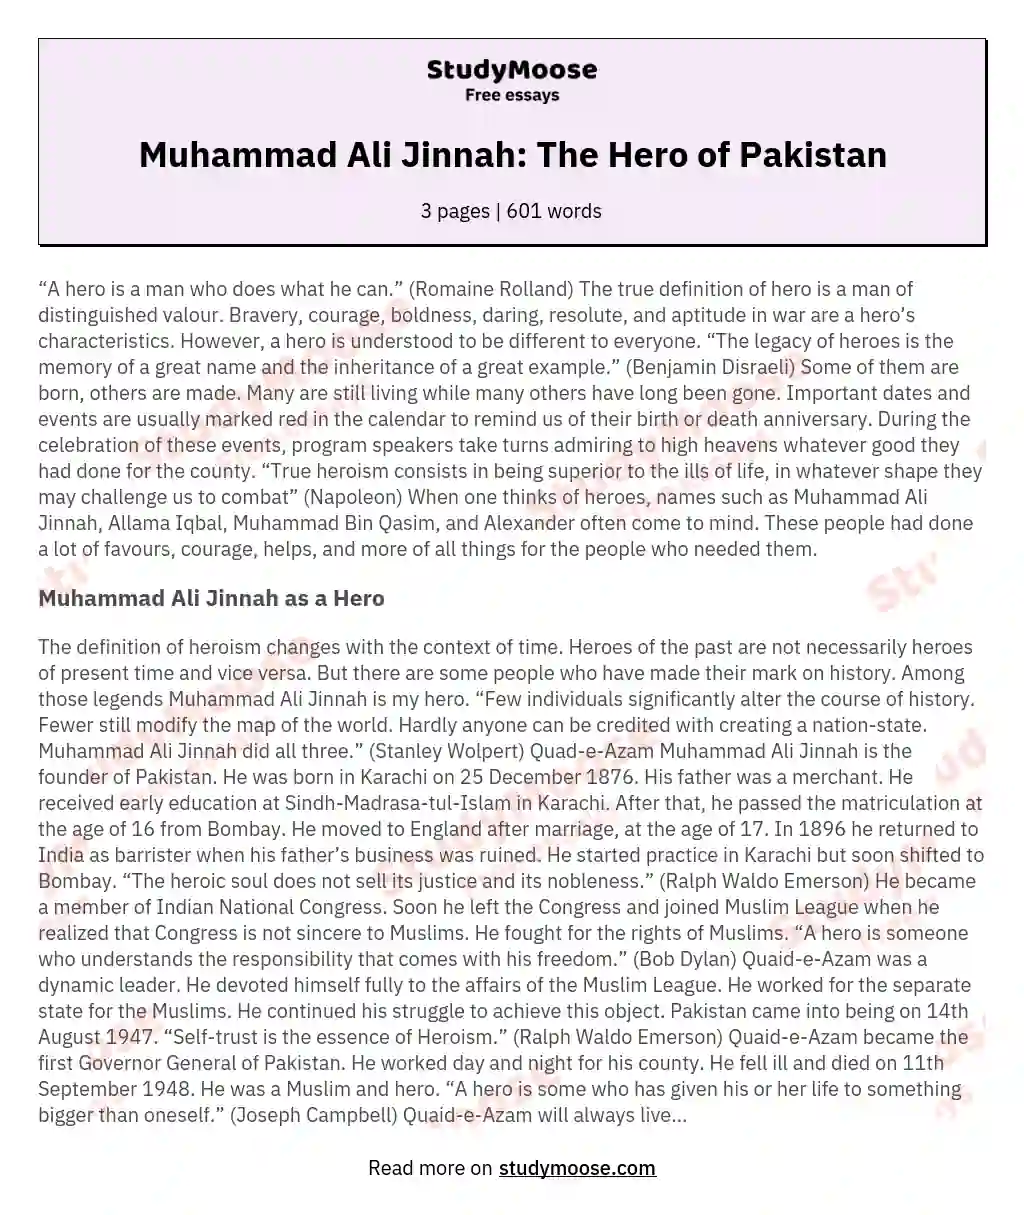 Muhammad Ali Jinnah: The Hero of Pakistan essay